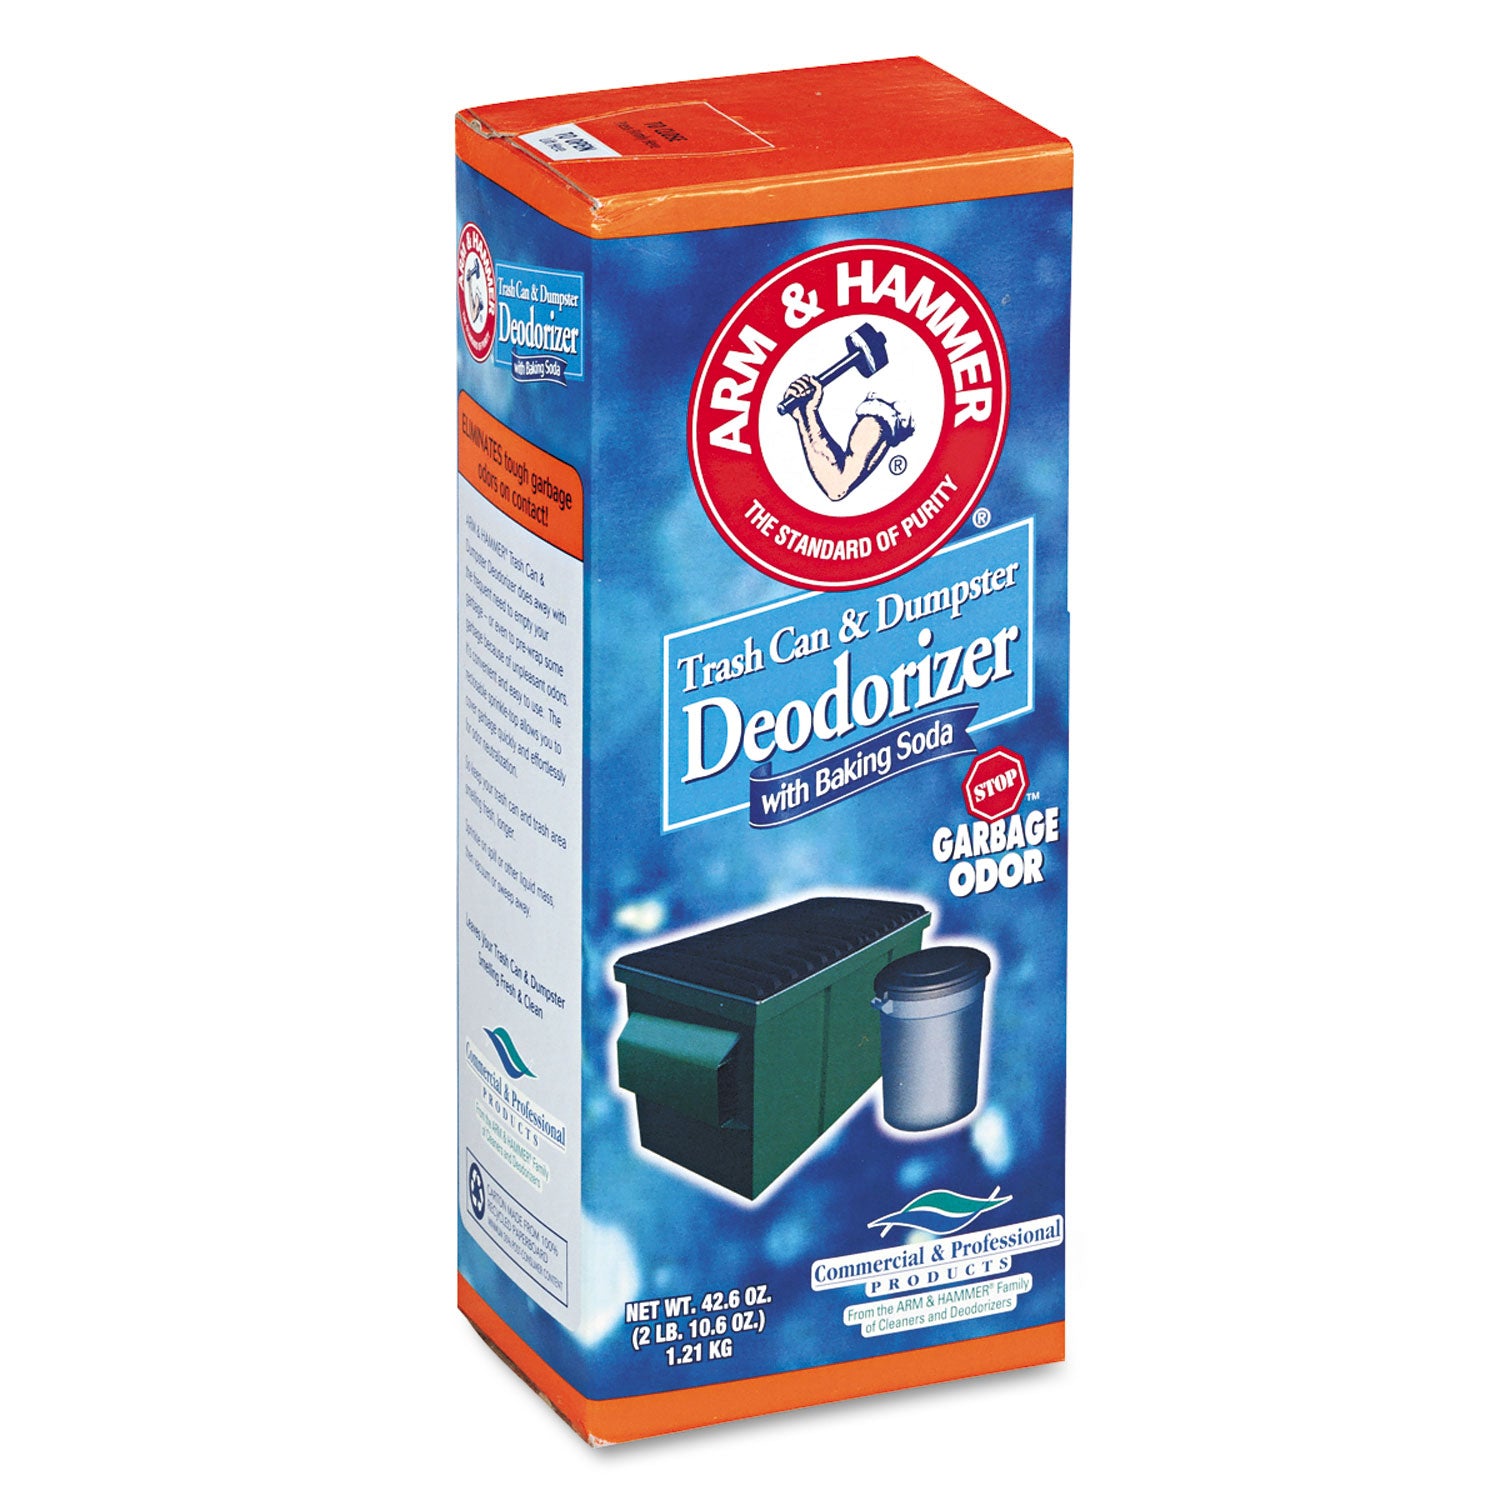 Trash Can and Dumpster Deodorizer, Sprinkle Top, Original, 42.6 oz Powder - 